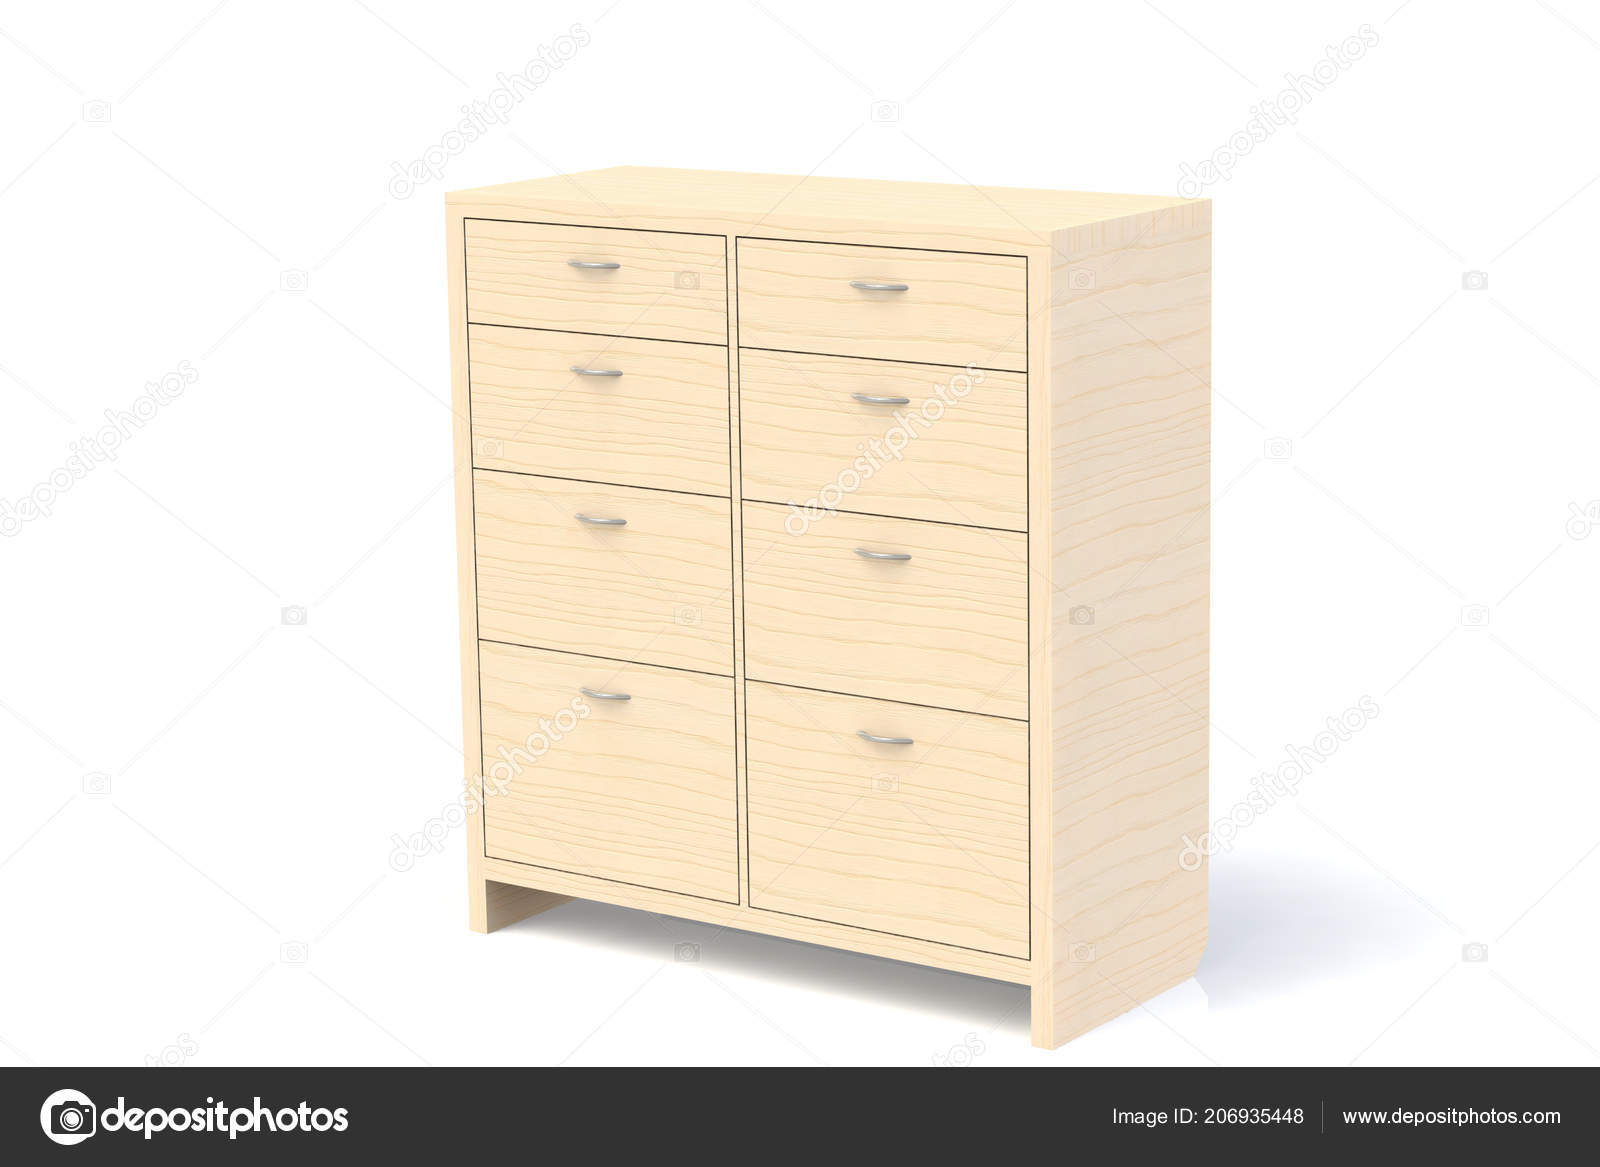 childrens drawers